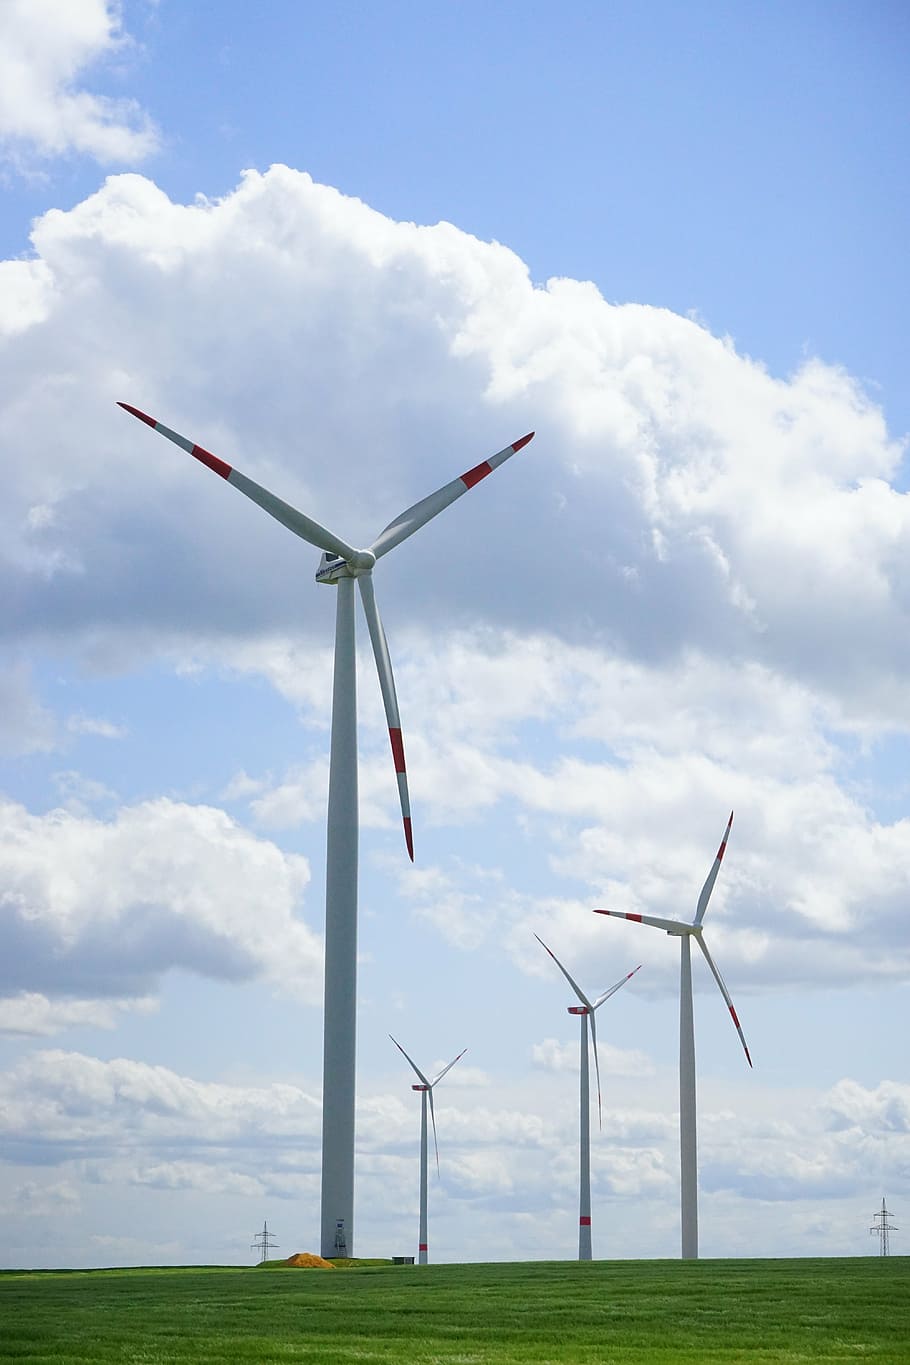 windmills, grass field, windräder, wind energy, wind power, energy, environment, current, wind, power generation